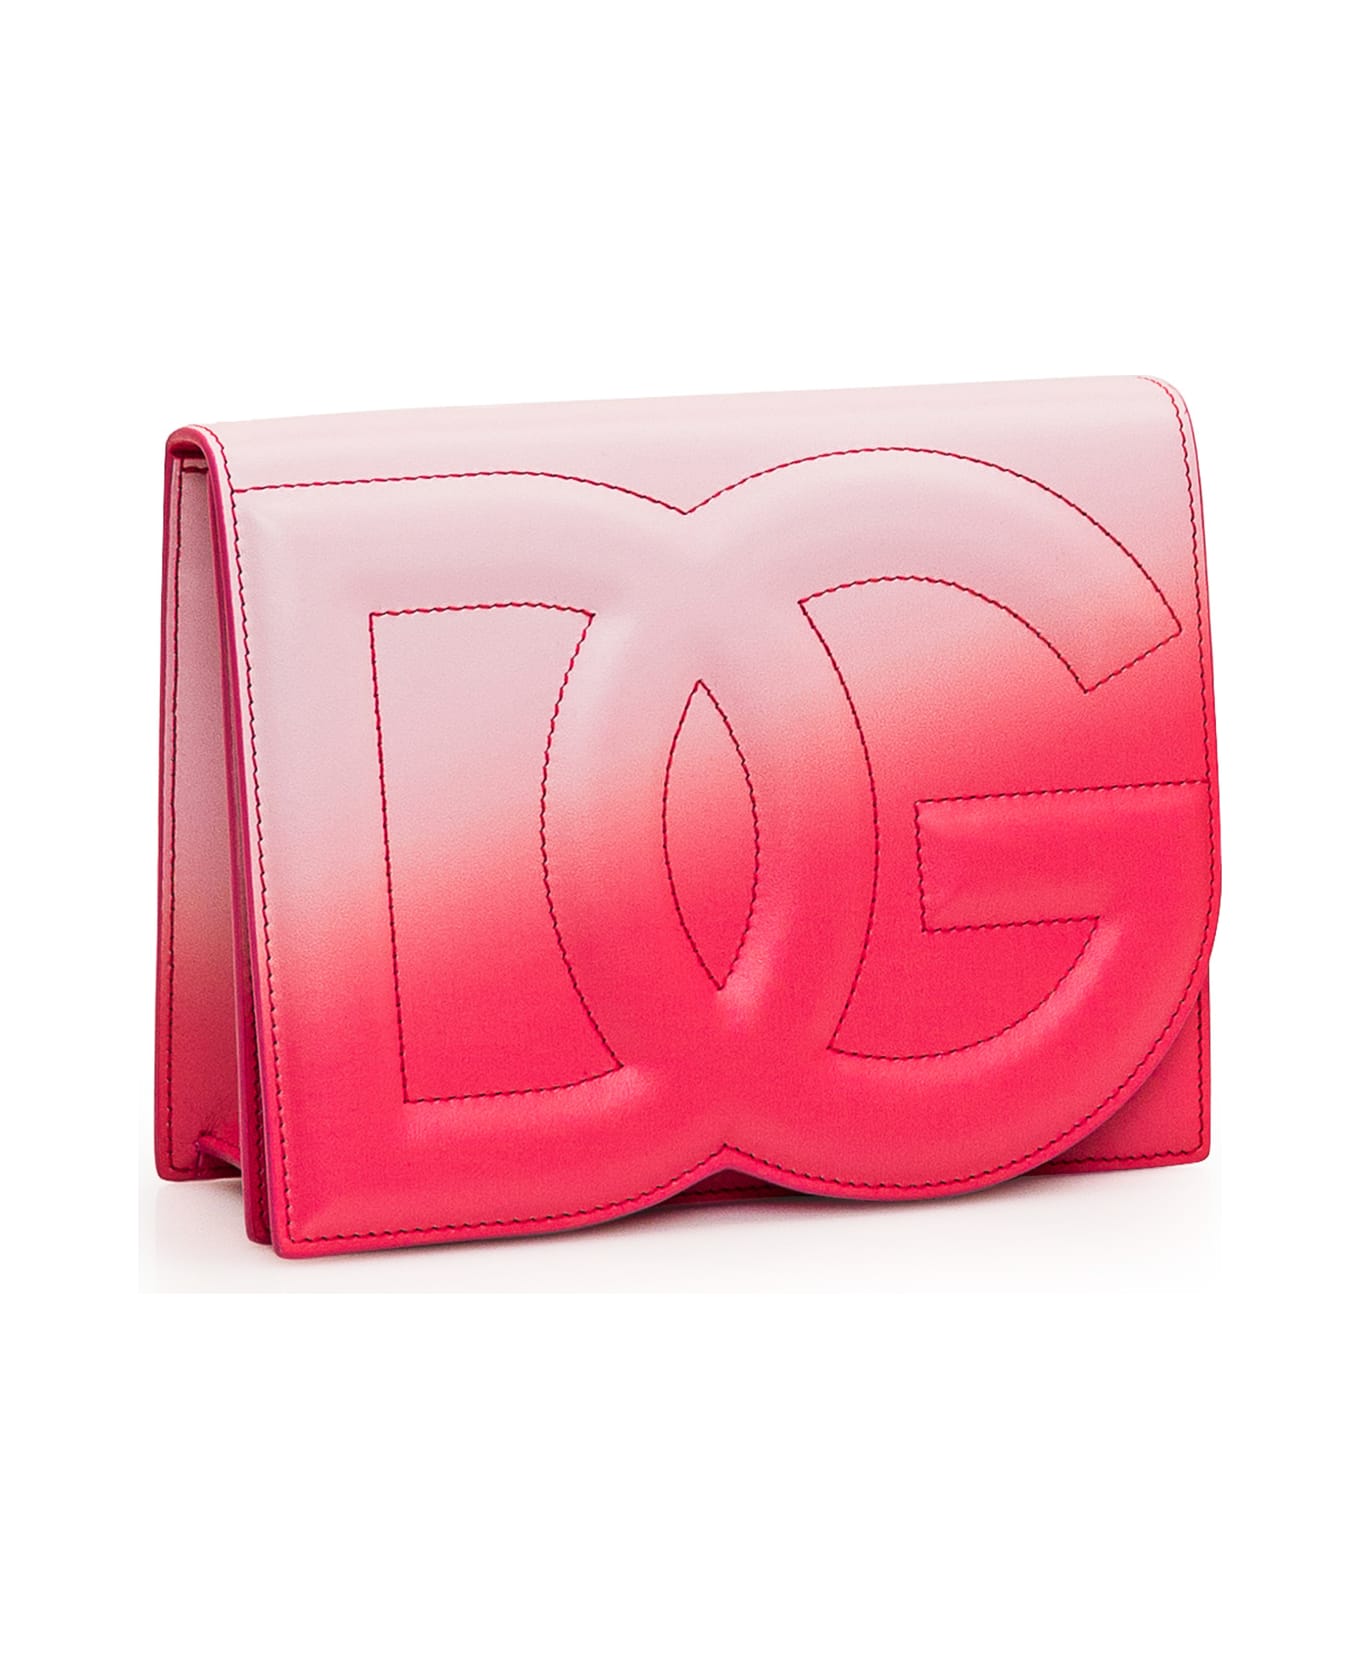 Dolce & Gabbana Leather Dg Bag